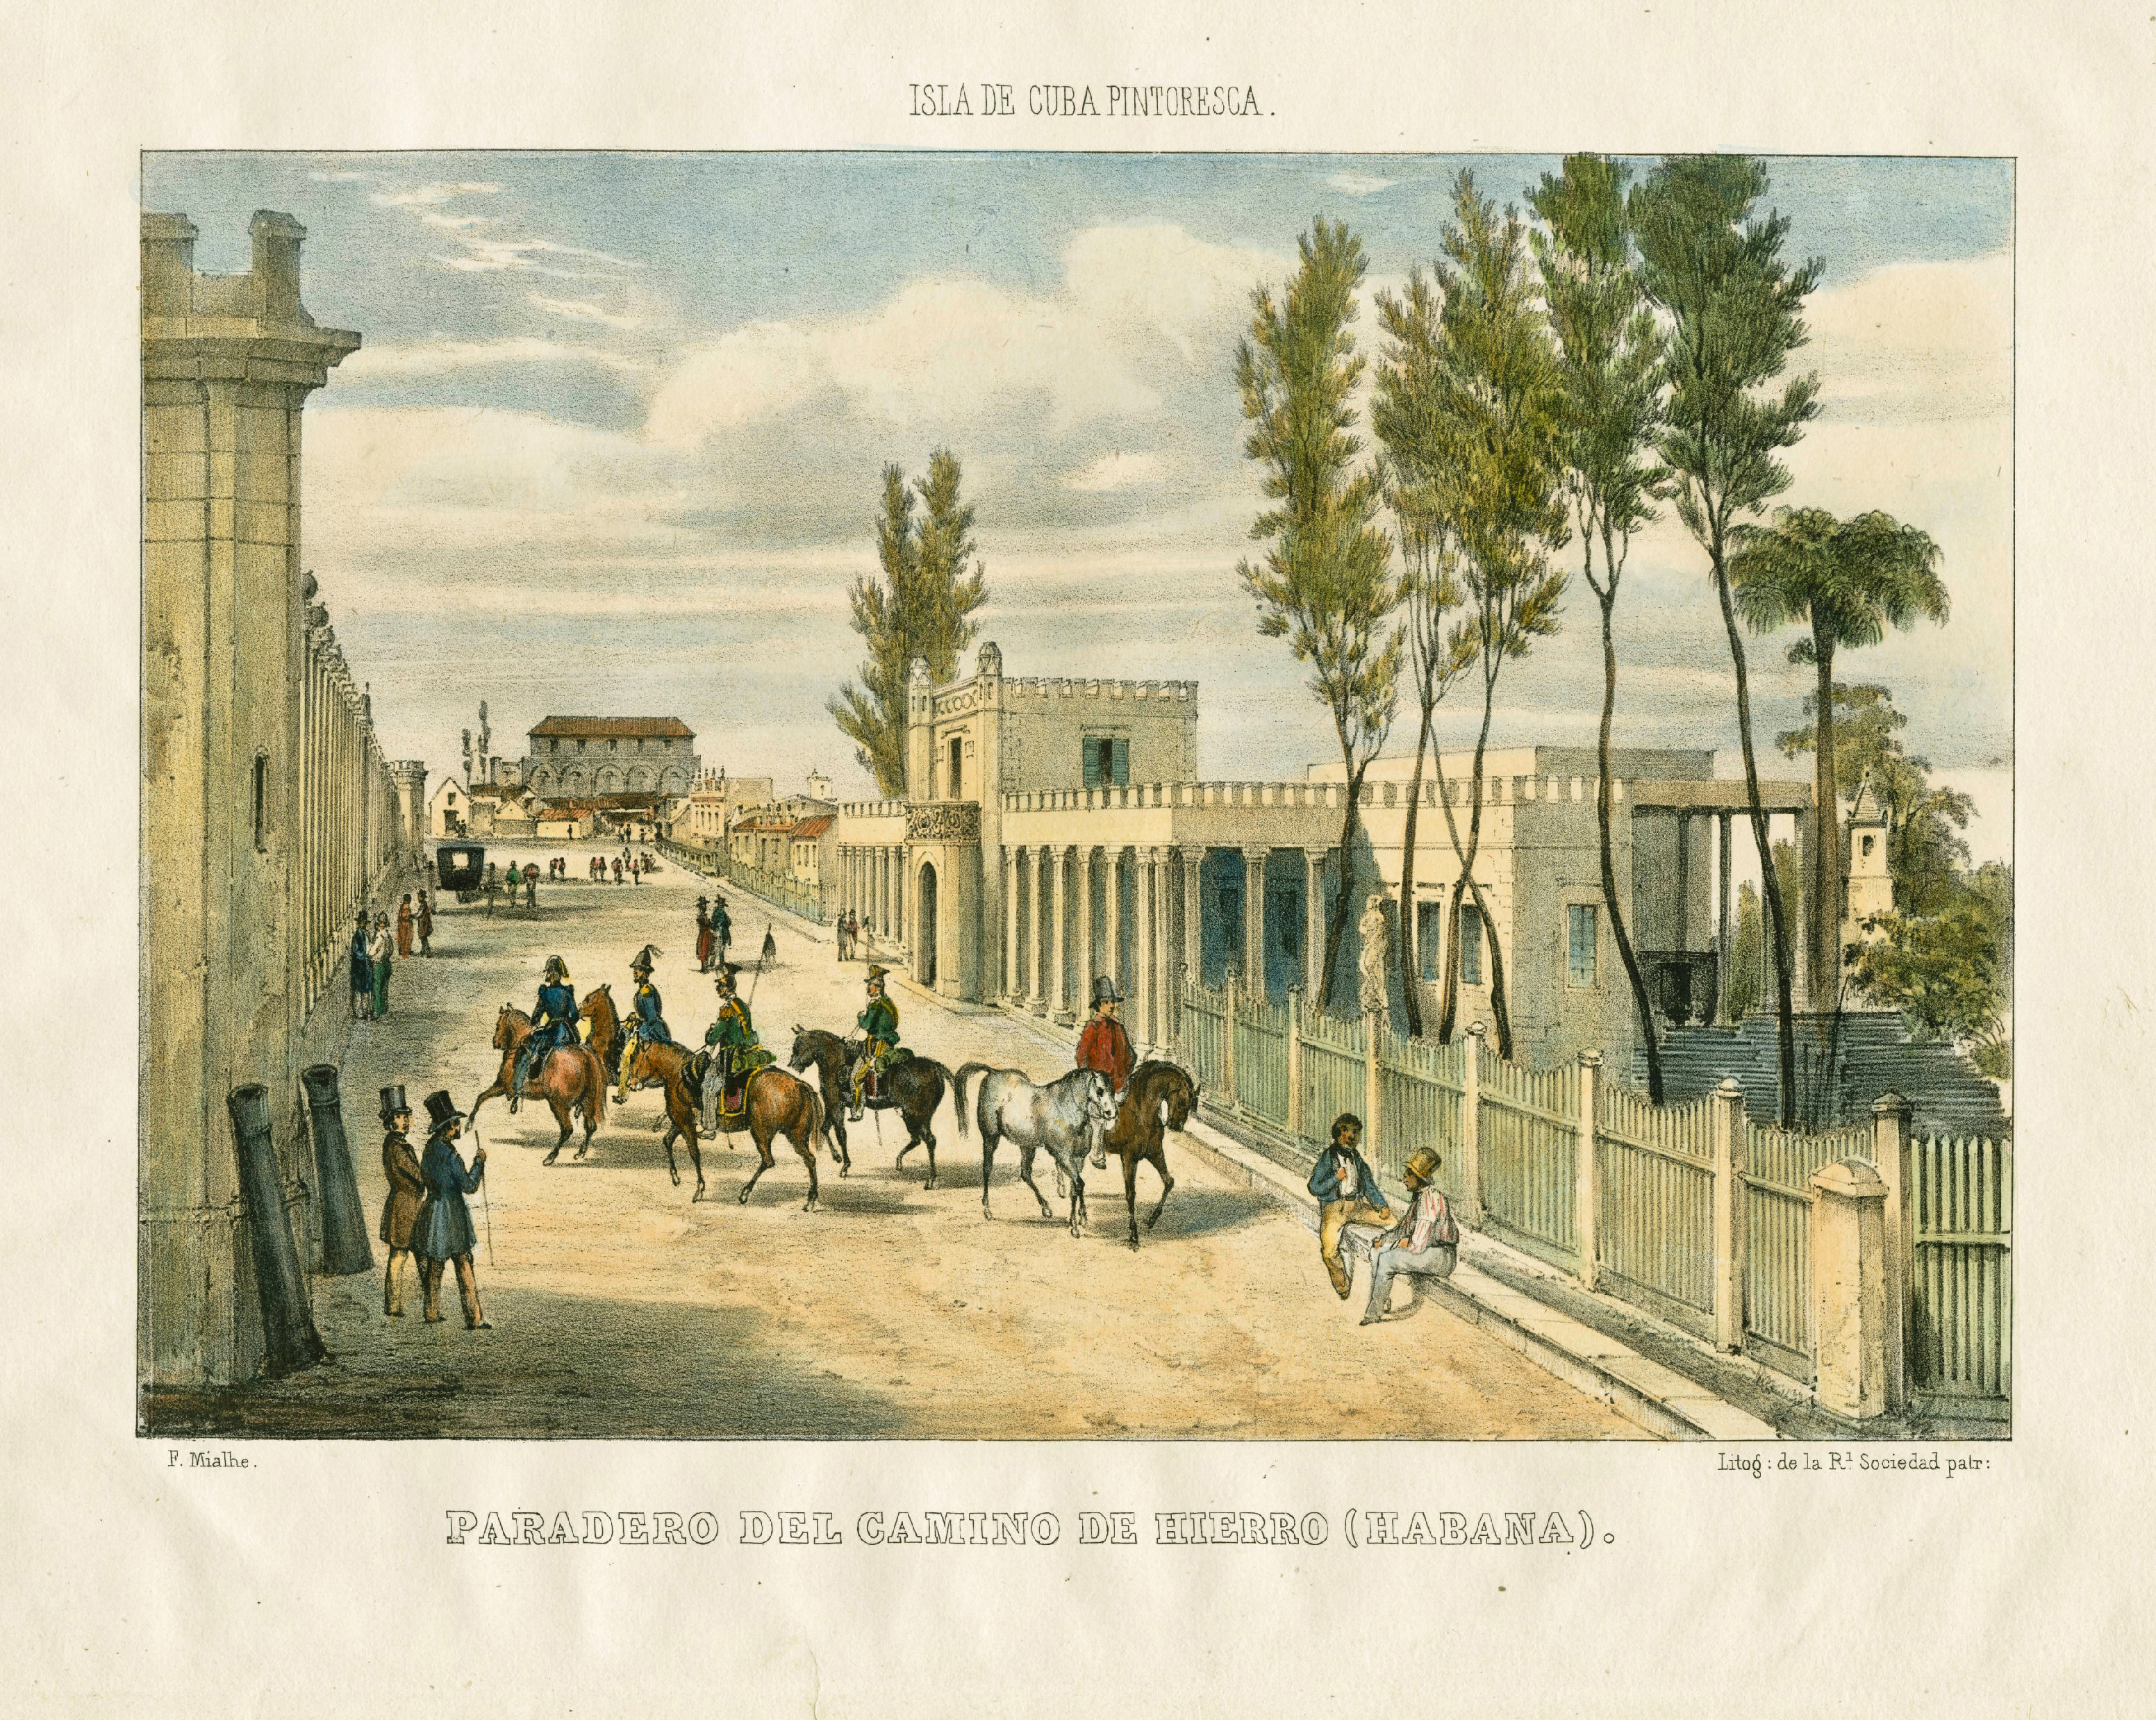 Train Station, Havana, 1839 Isla de Cuba Pintoresca